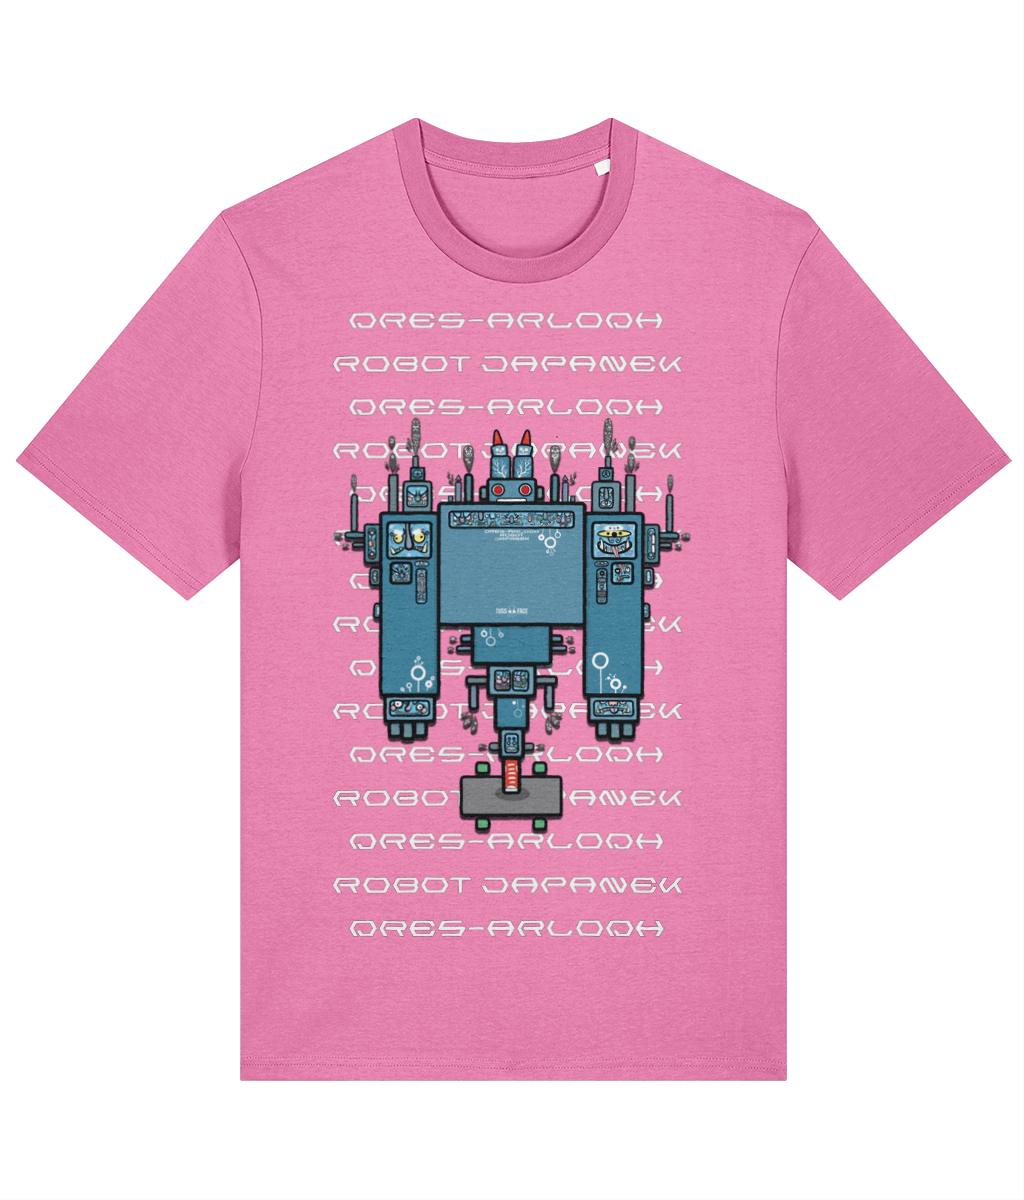 Japanese Robot Overlord - Kernewek T-shirt